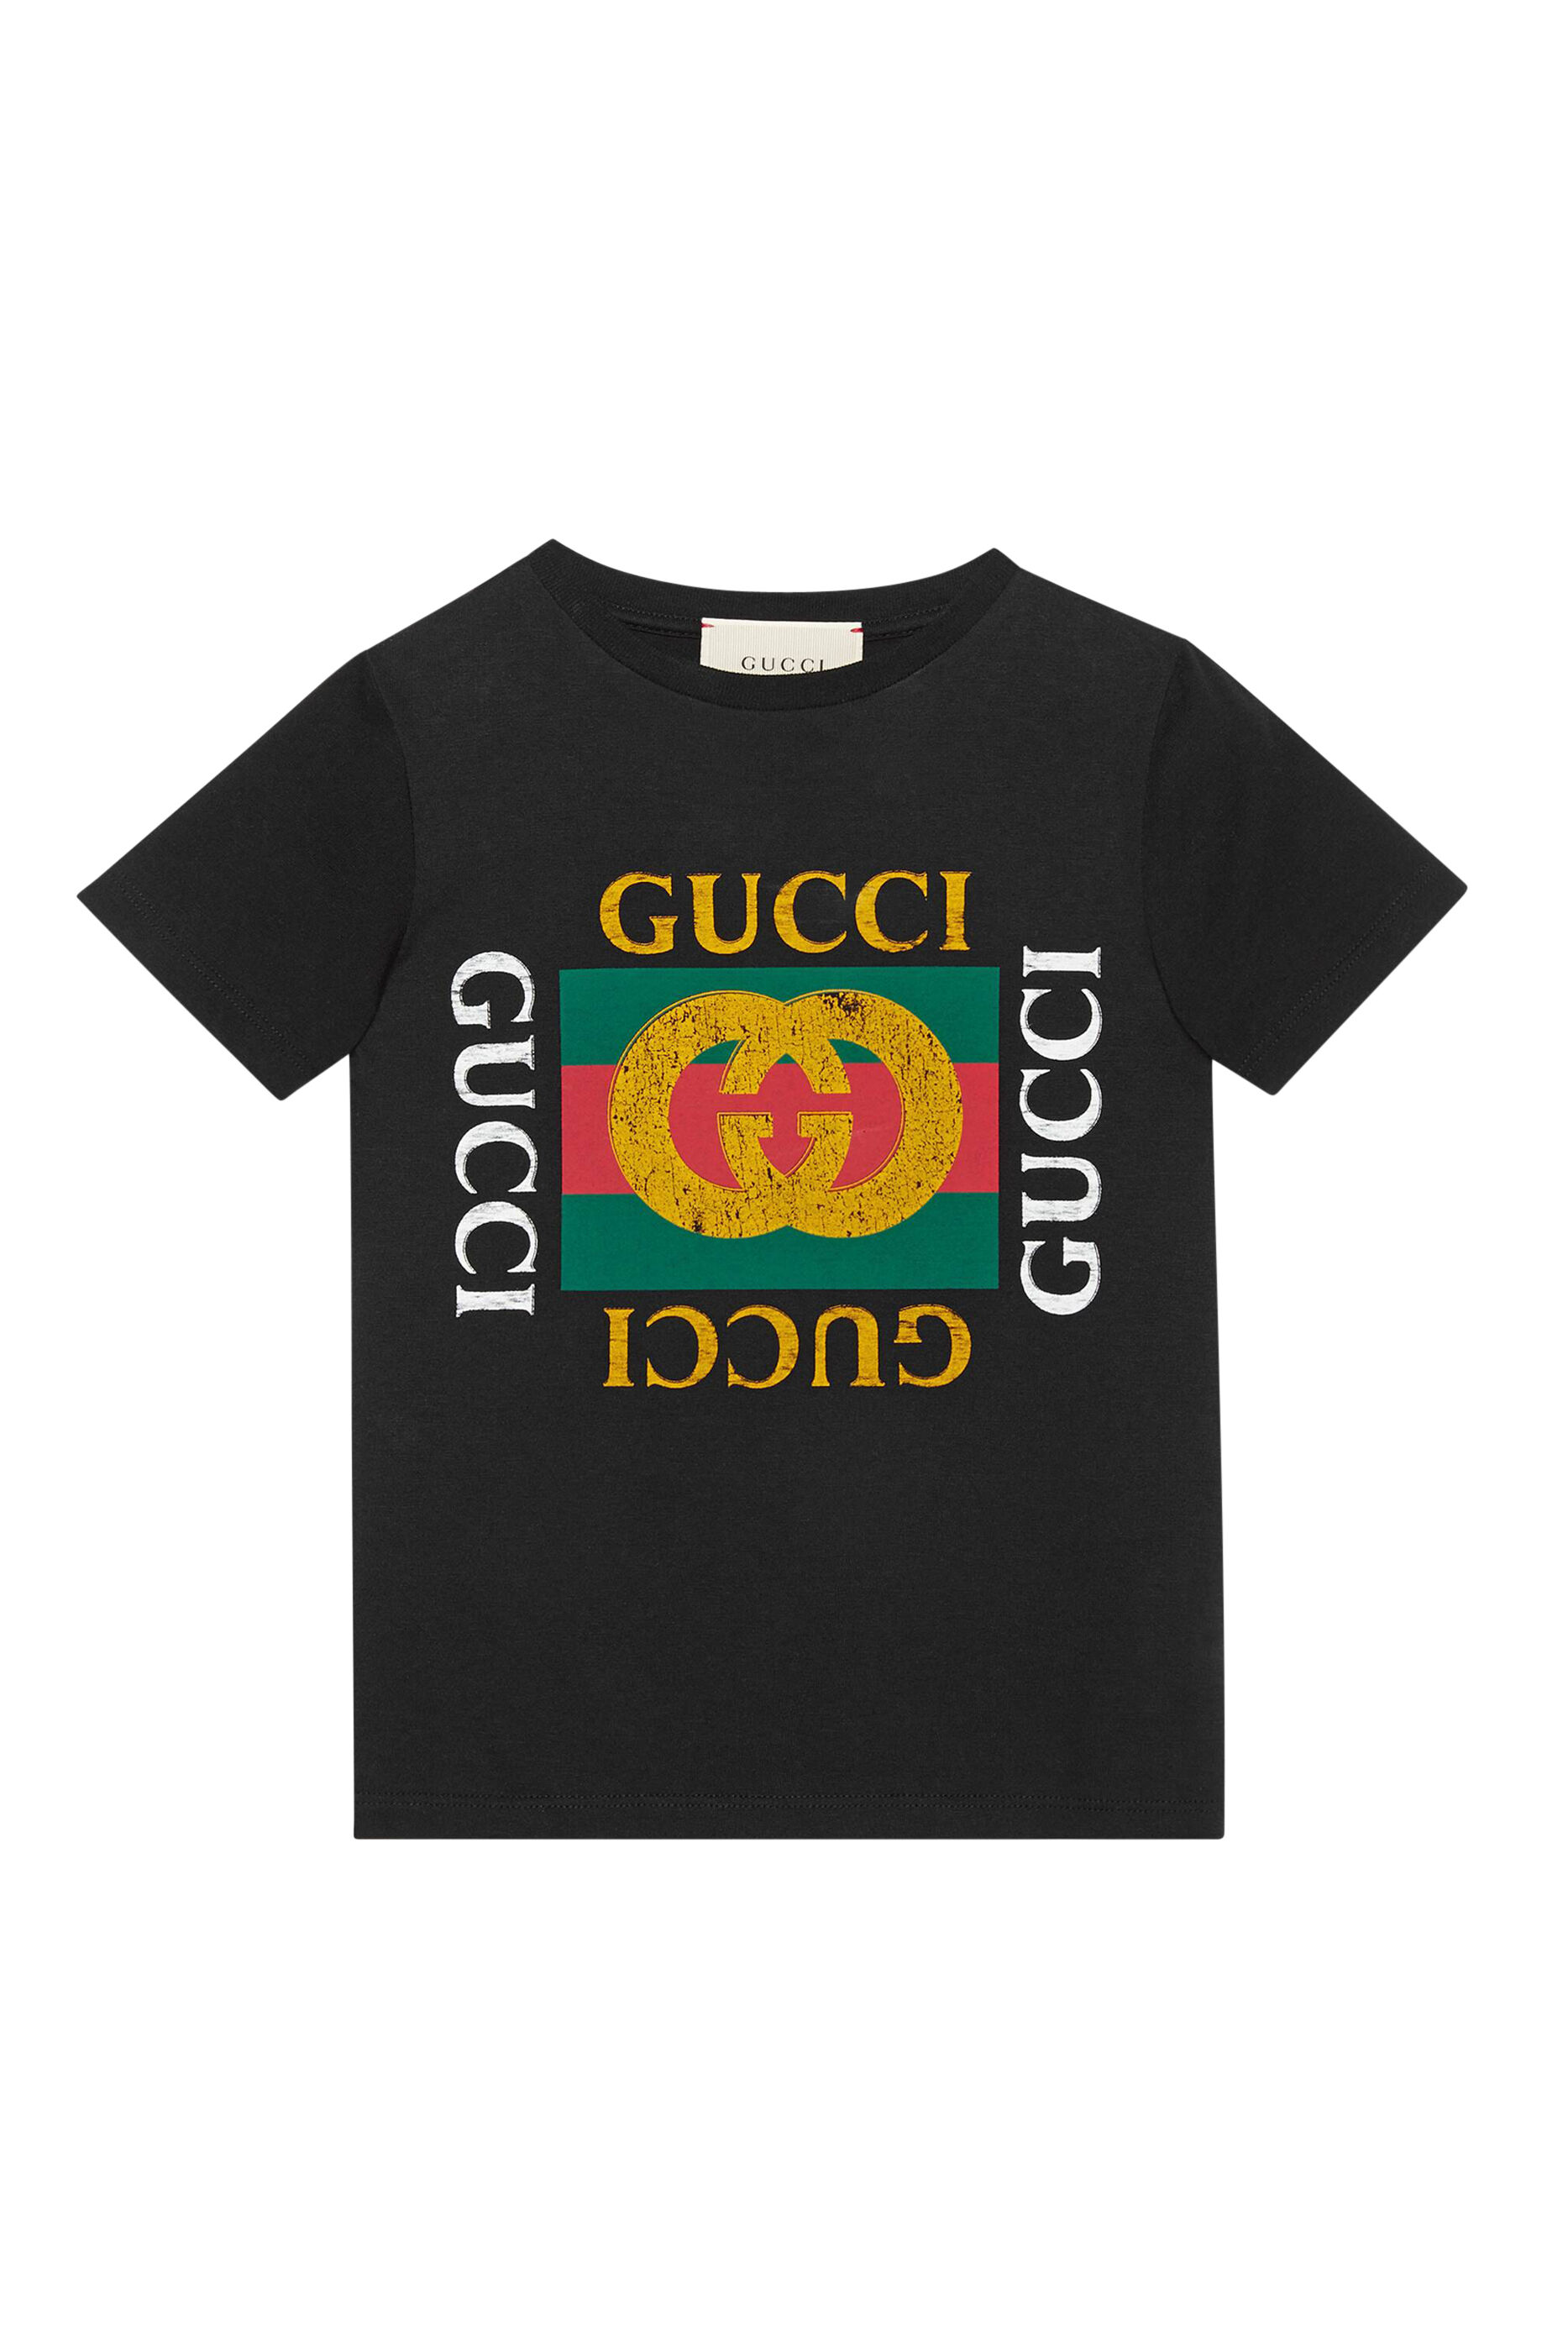 Gucci Vintage Gucci Logo Print T-Shirt 